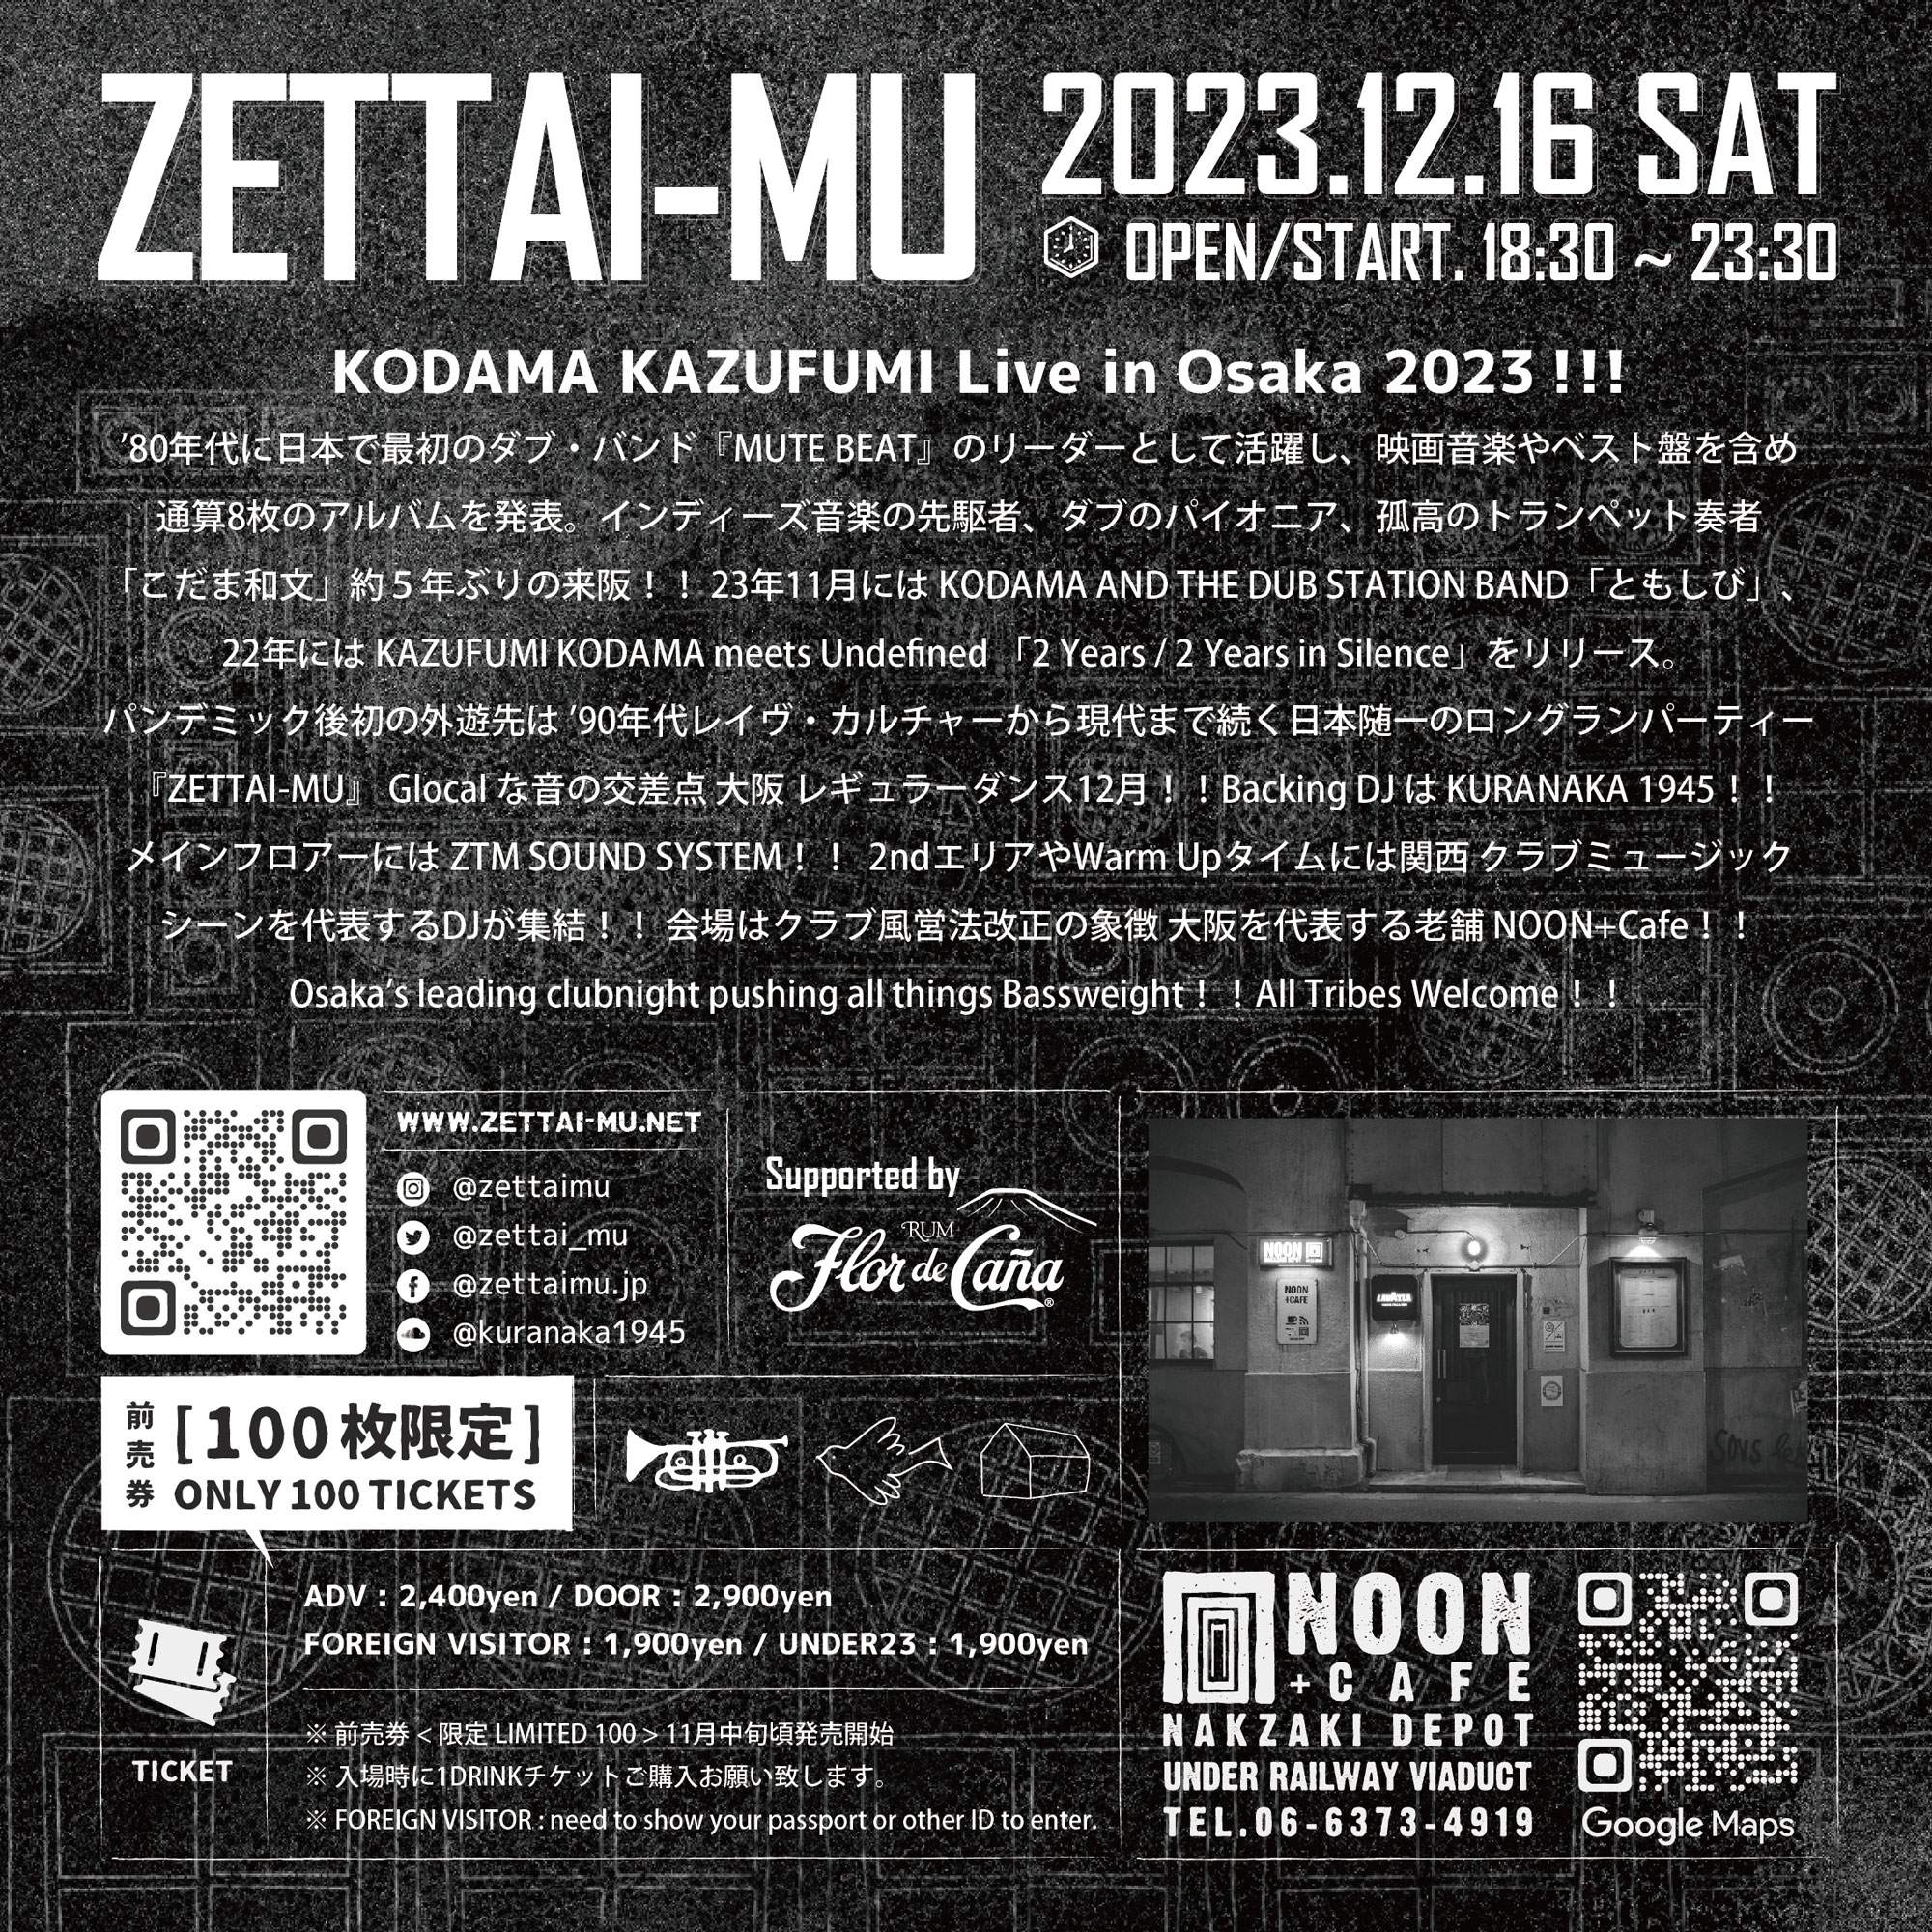 Zettai-Mu 'KODAMA KAZUFUMI Live in Osaka 2023' - フライヤー裏